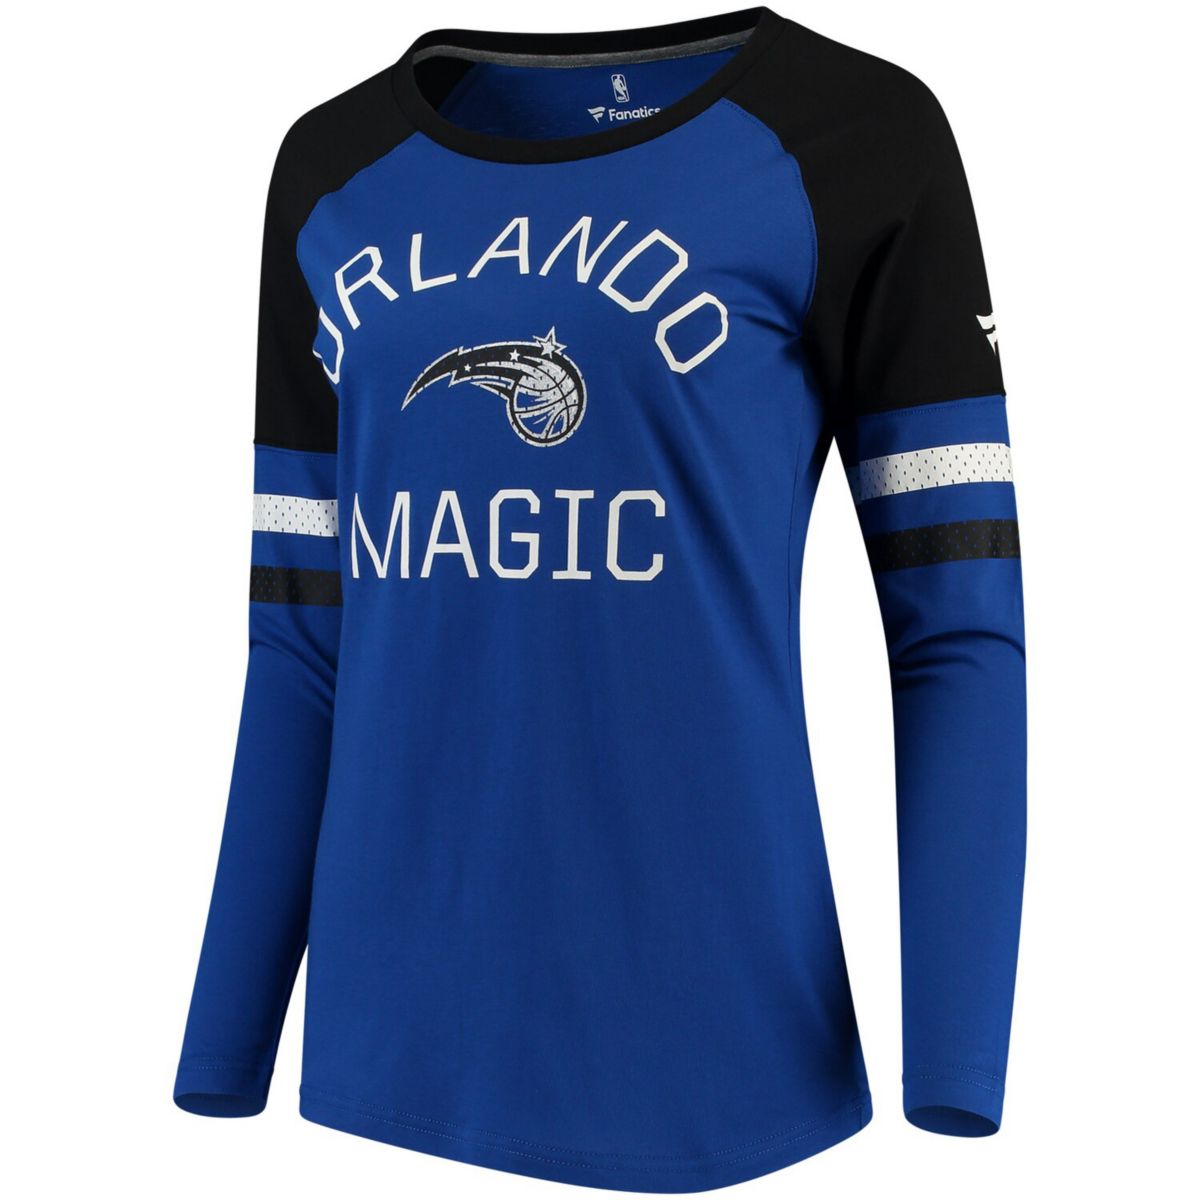 Women's Fanatics Branded Blue/Black Orlando Magic Iconic Long Sleeve T-Shirt Fanatics